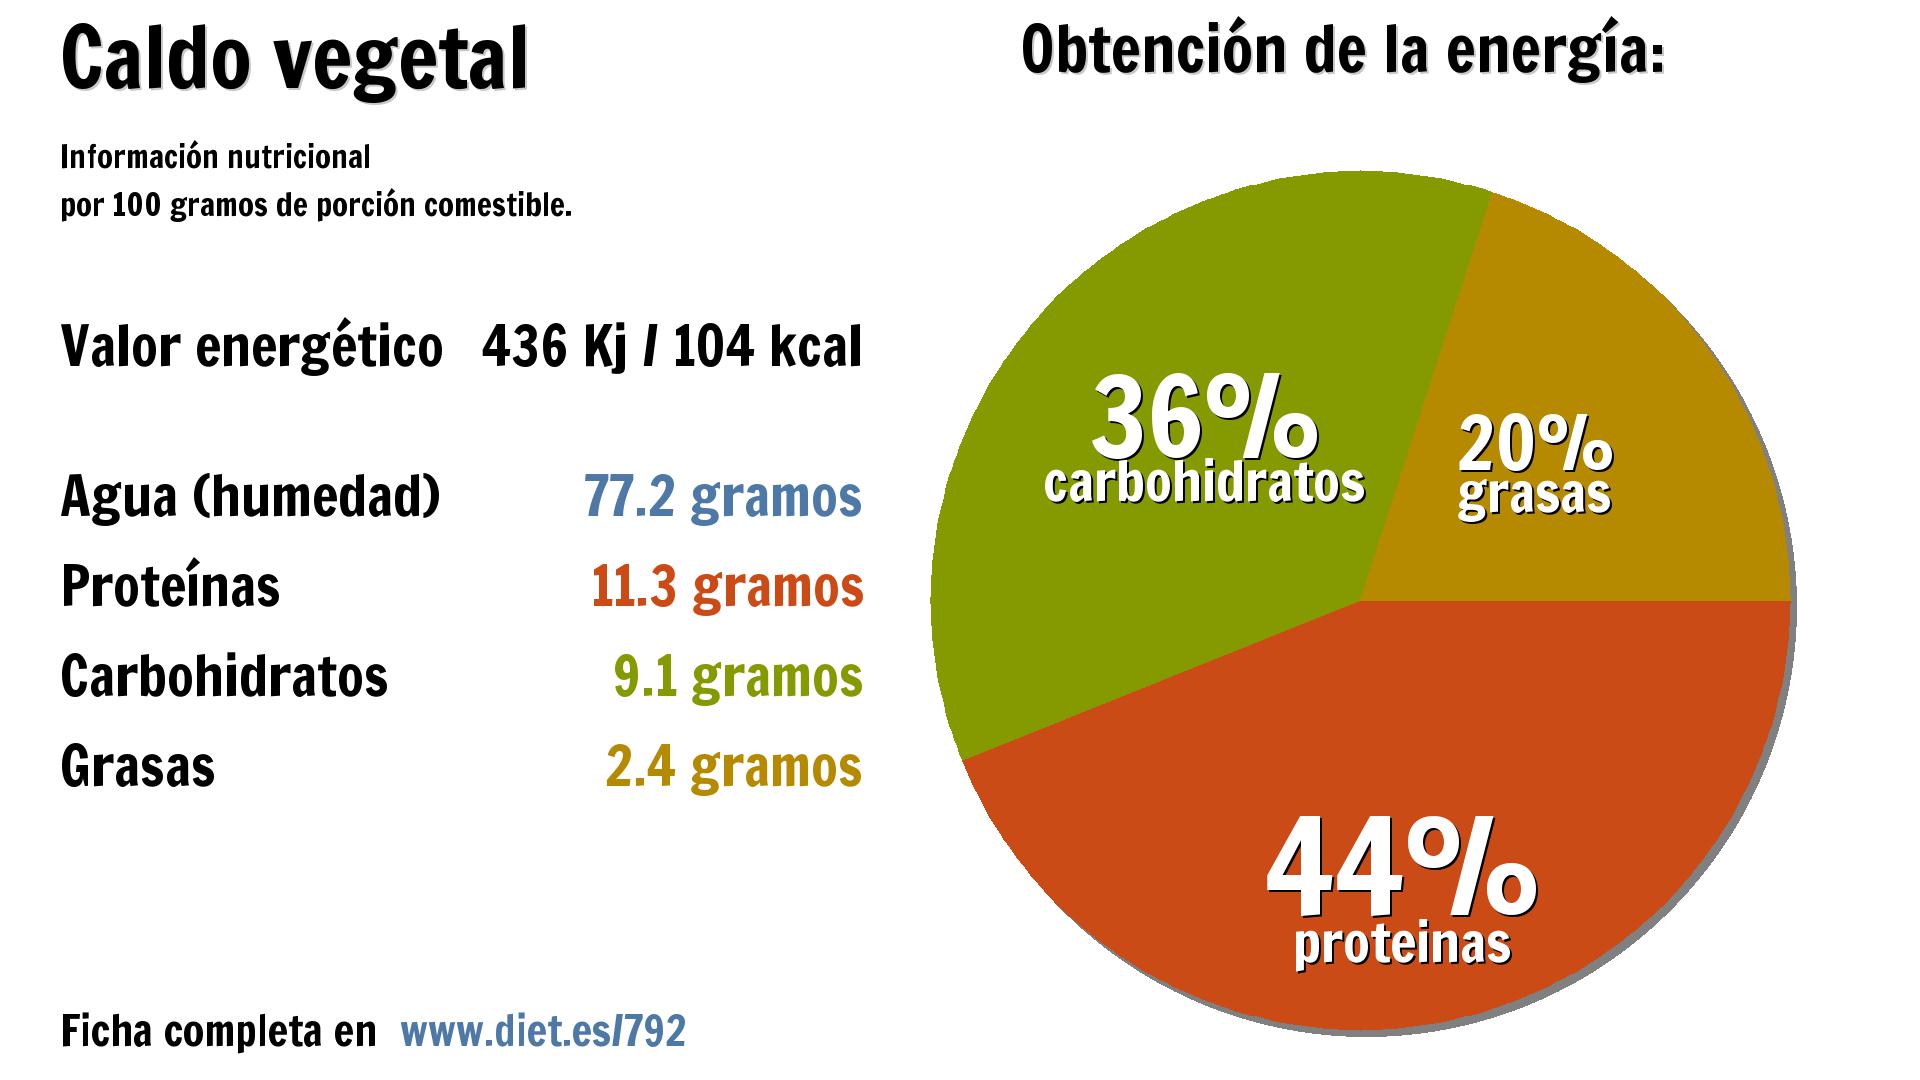 Caldo vegetal: energía 436 Kj, agua 77 g., proteínas 11 g., carbohidratos 9 g. y grasas 2 g.